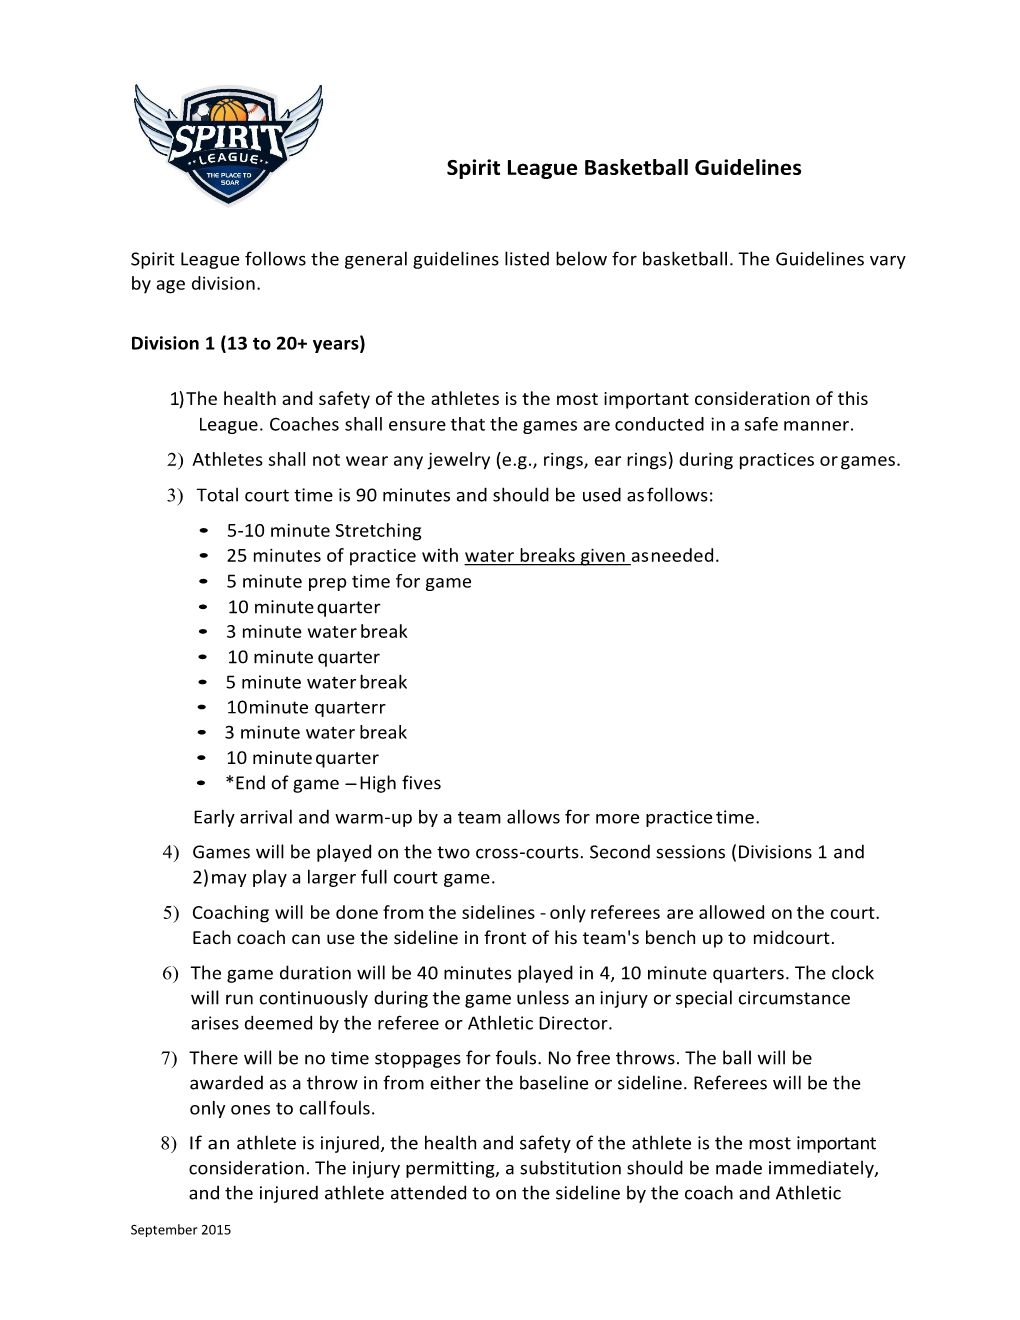 Basketball Rules & Conduct